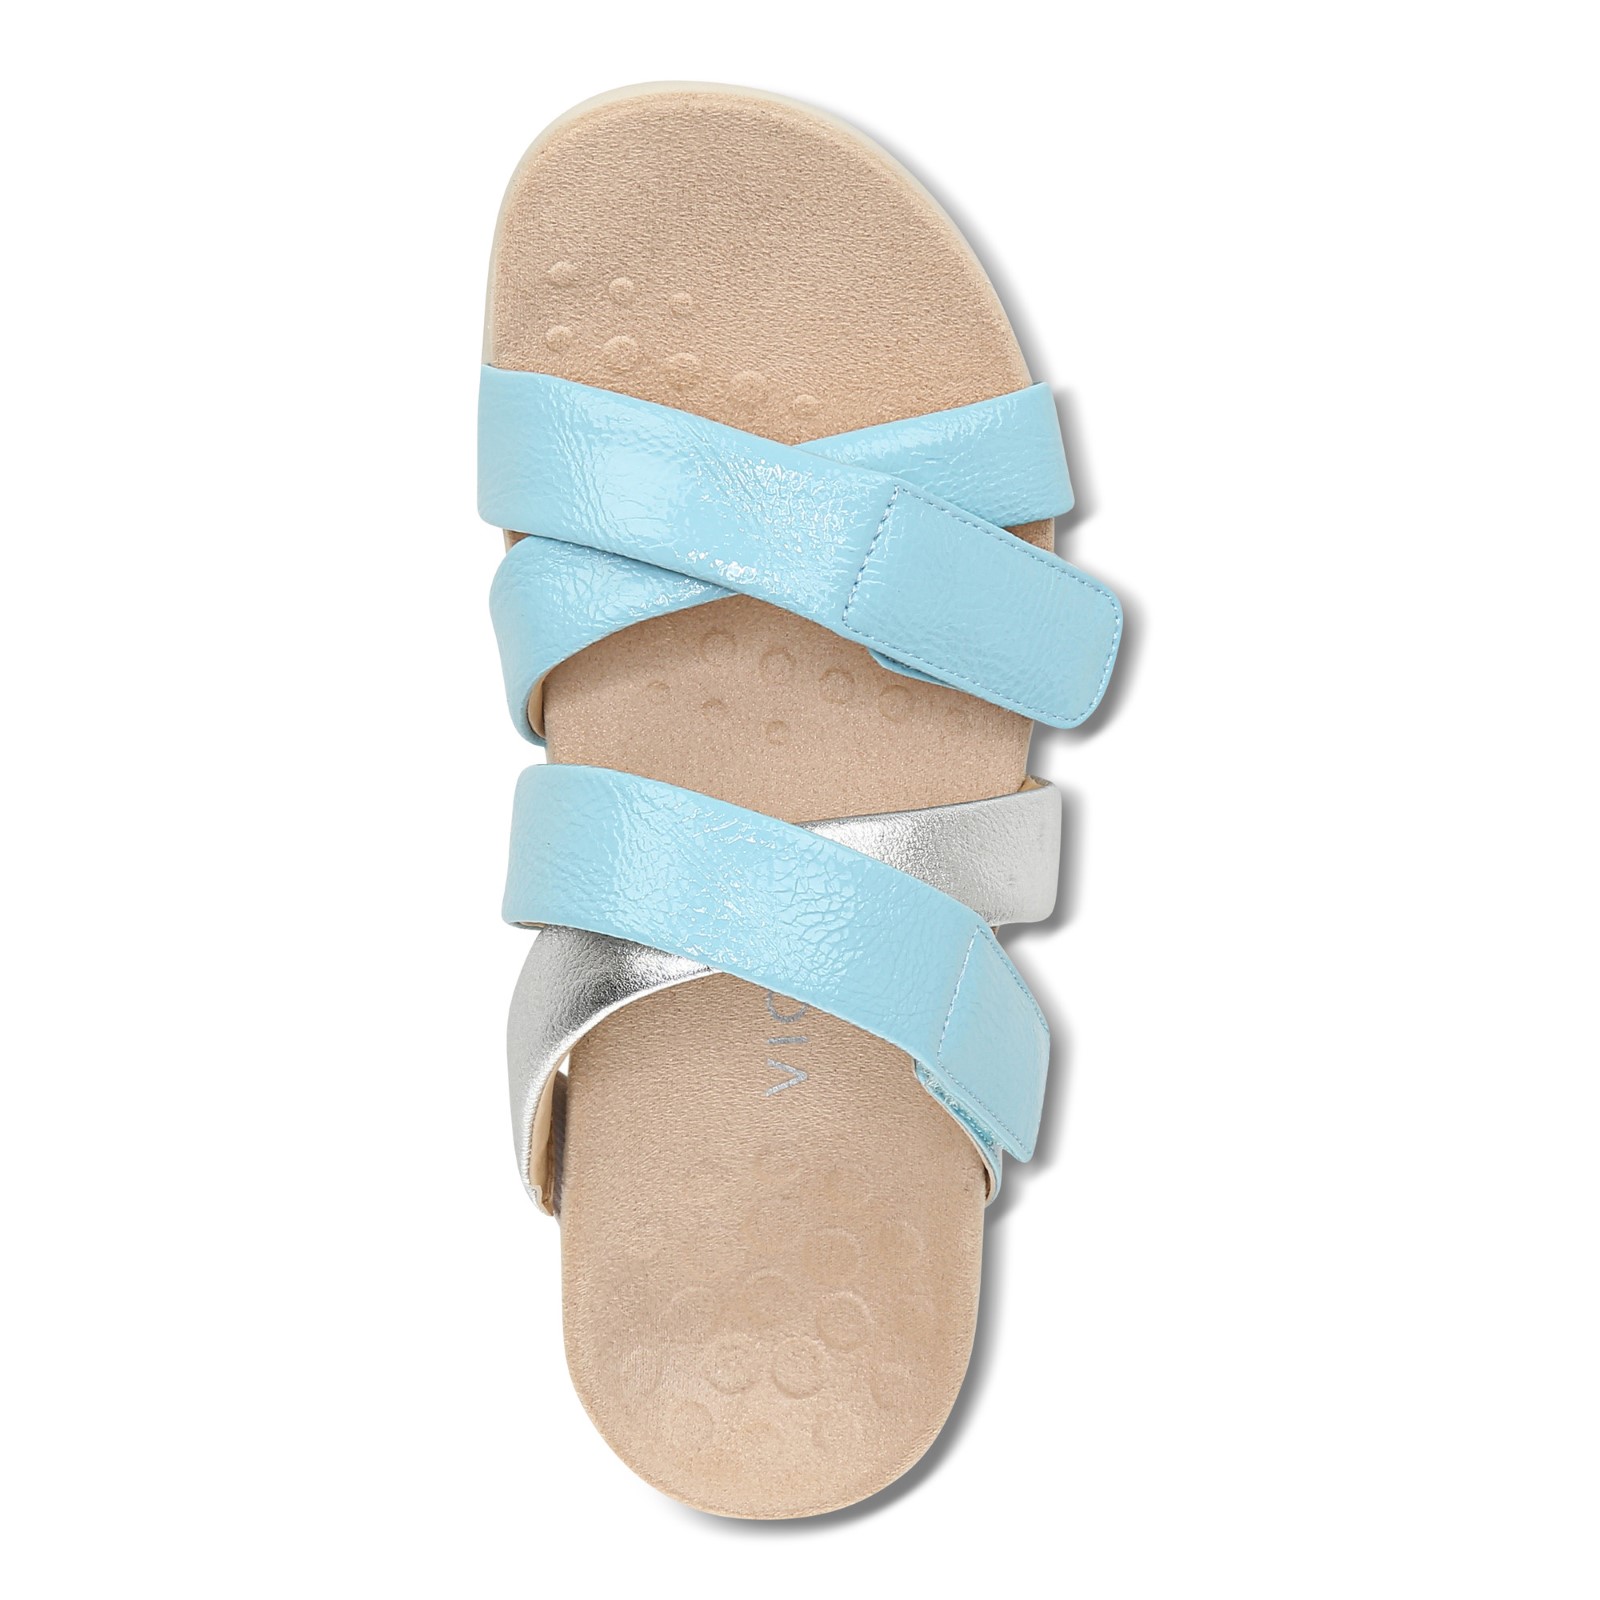 Vionic Hadlie Women's Orthotic Slide Sandals - Free Shipping